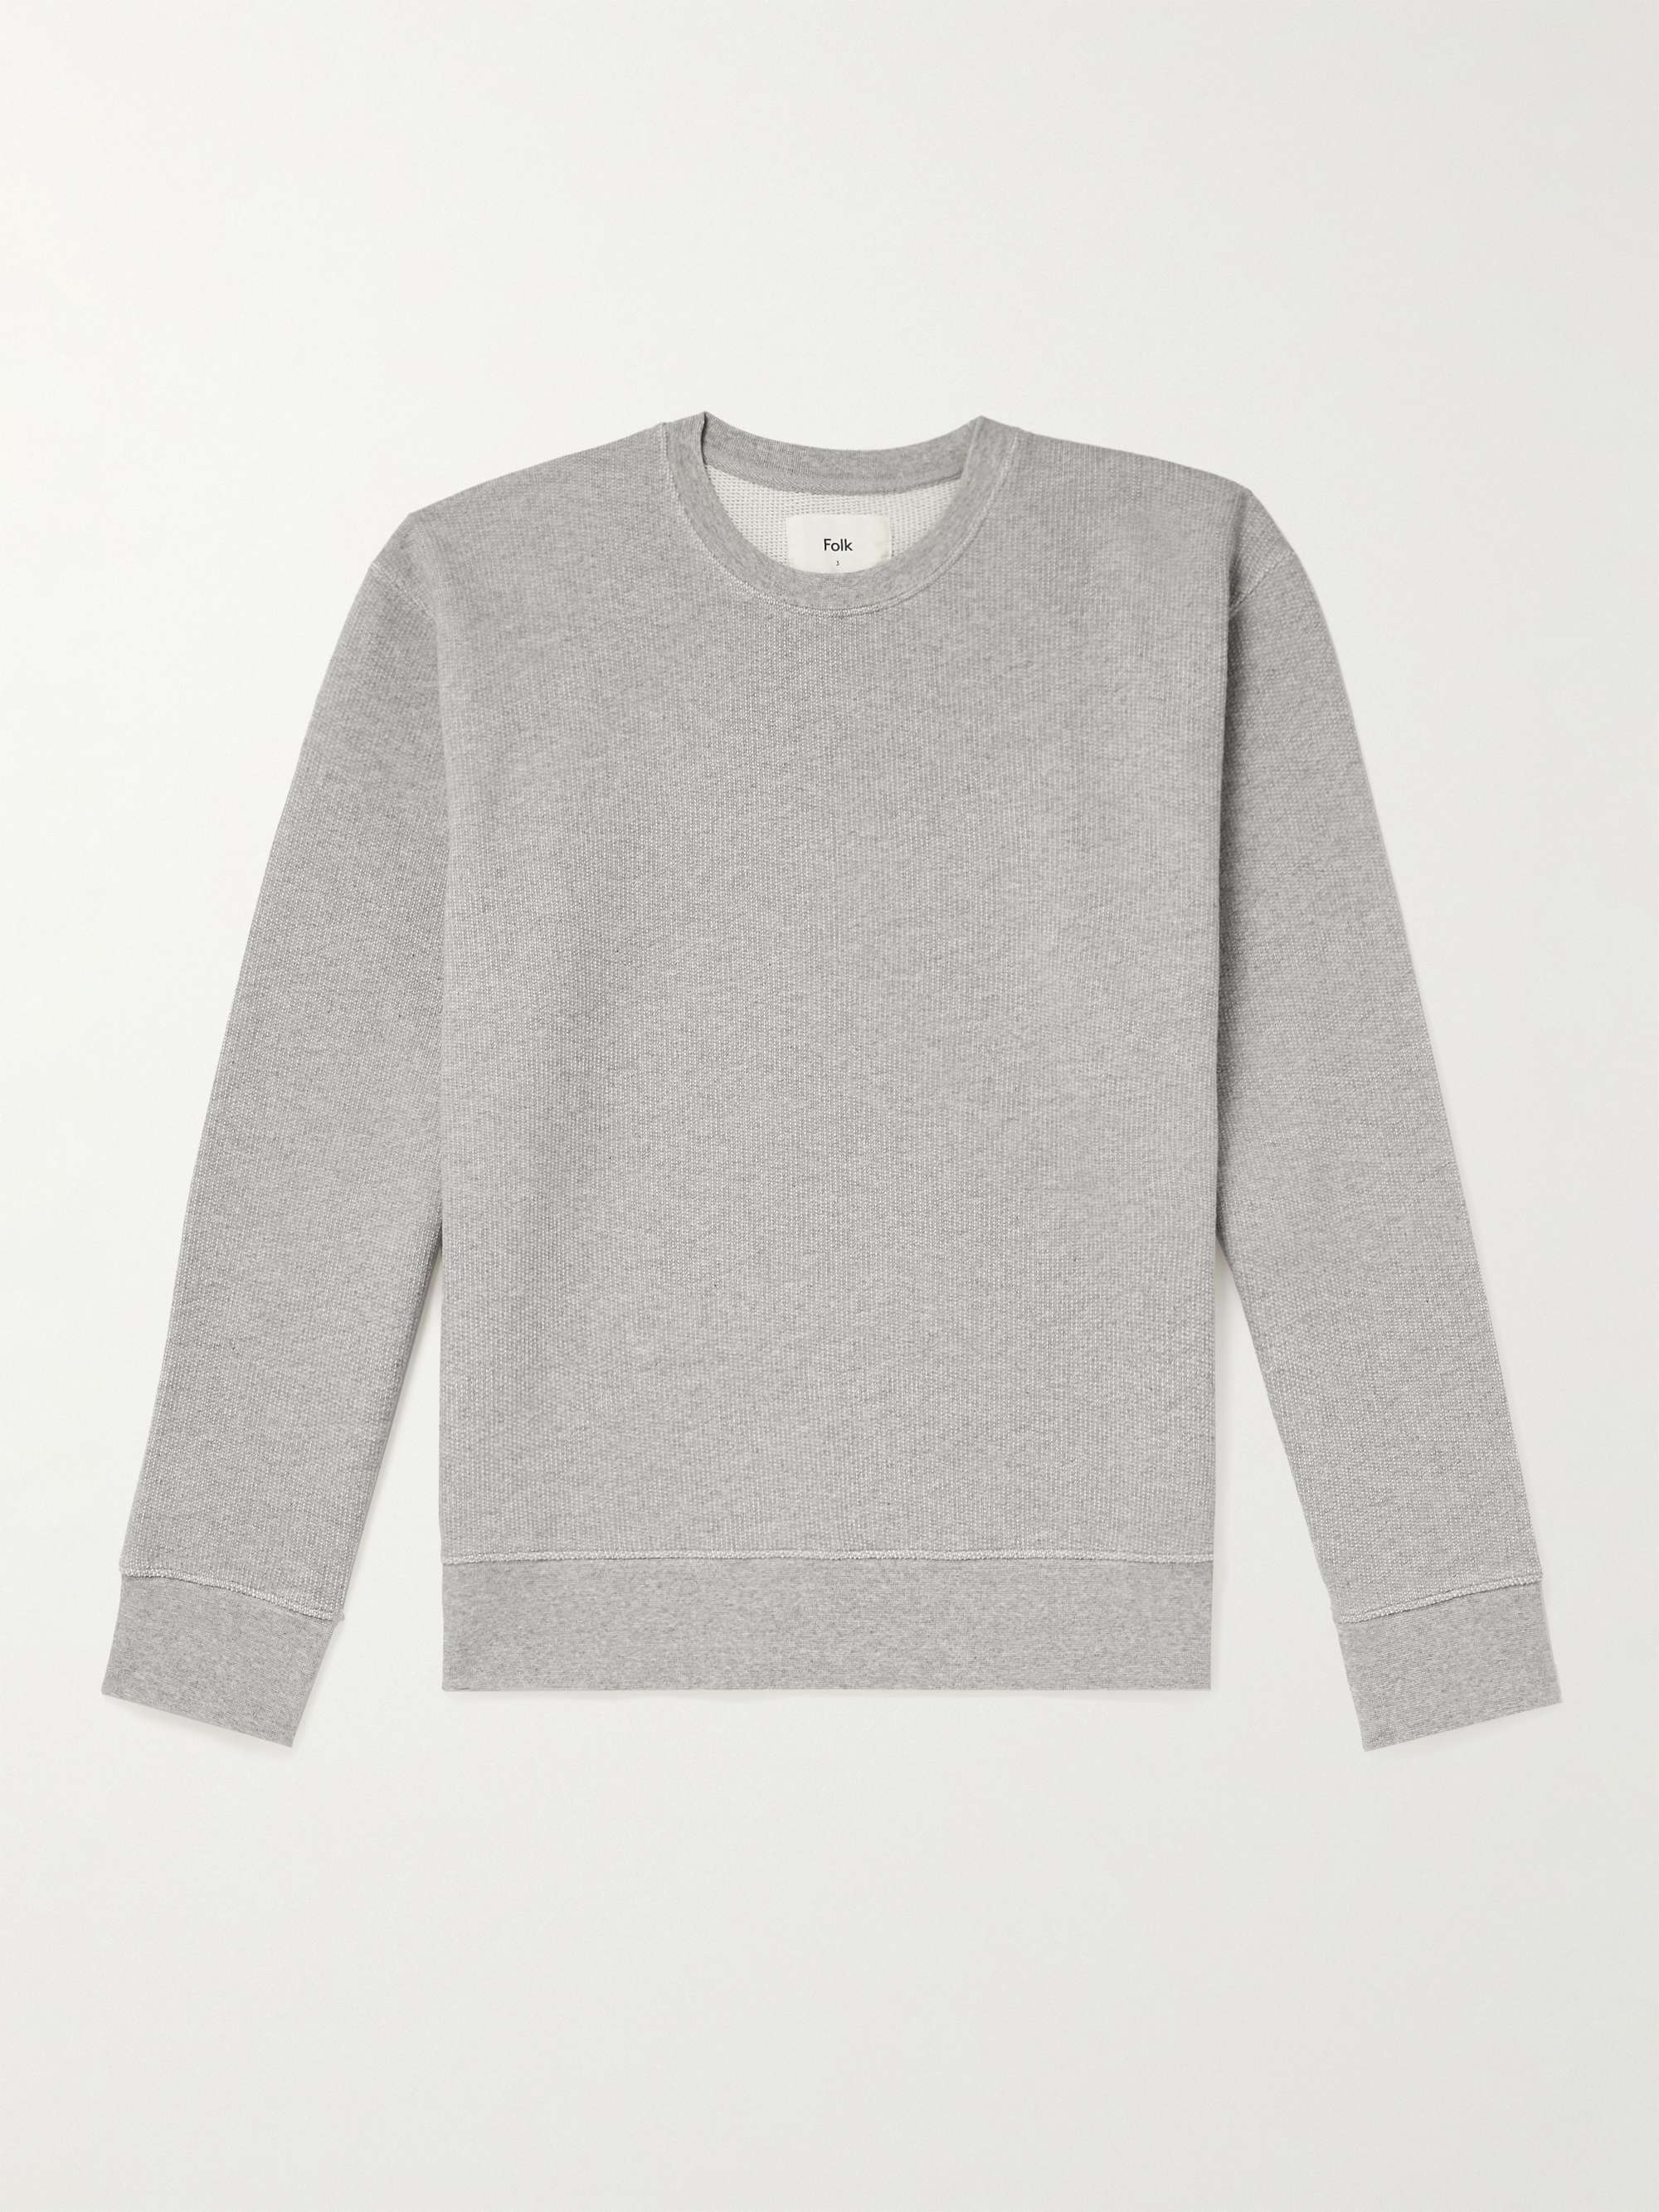 FOLK Cotton-Jersey Sweatshirt for Men | MR PORTER